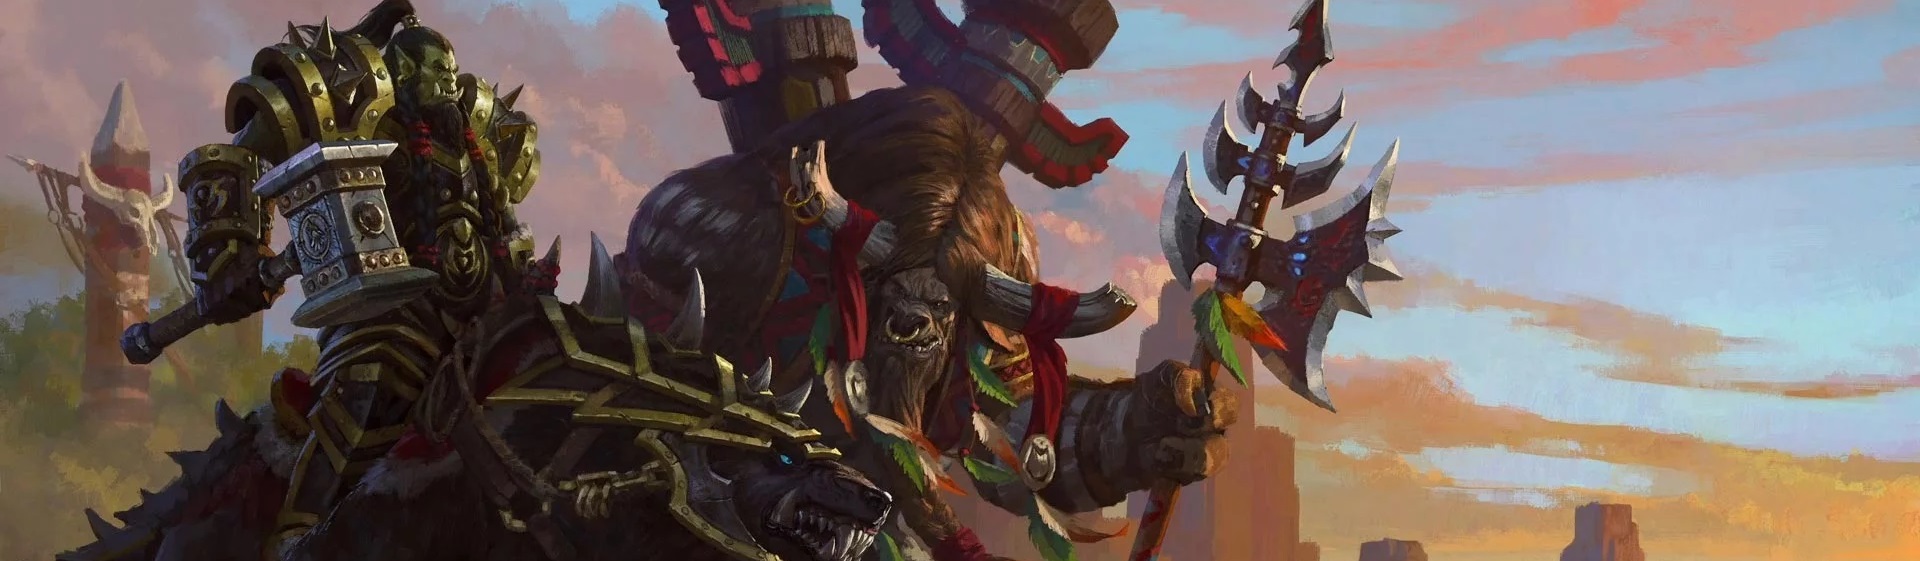 Warcraft 3 Wallpaper Arthas